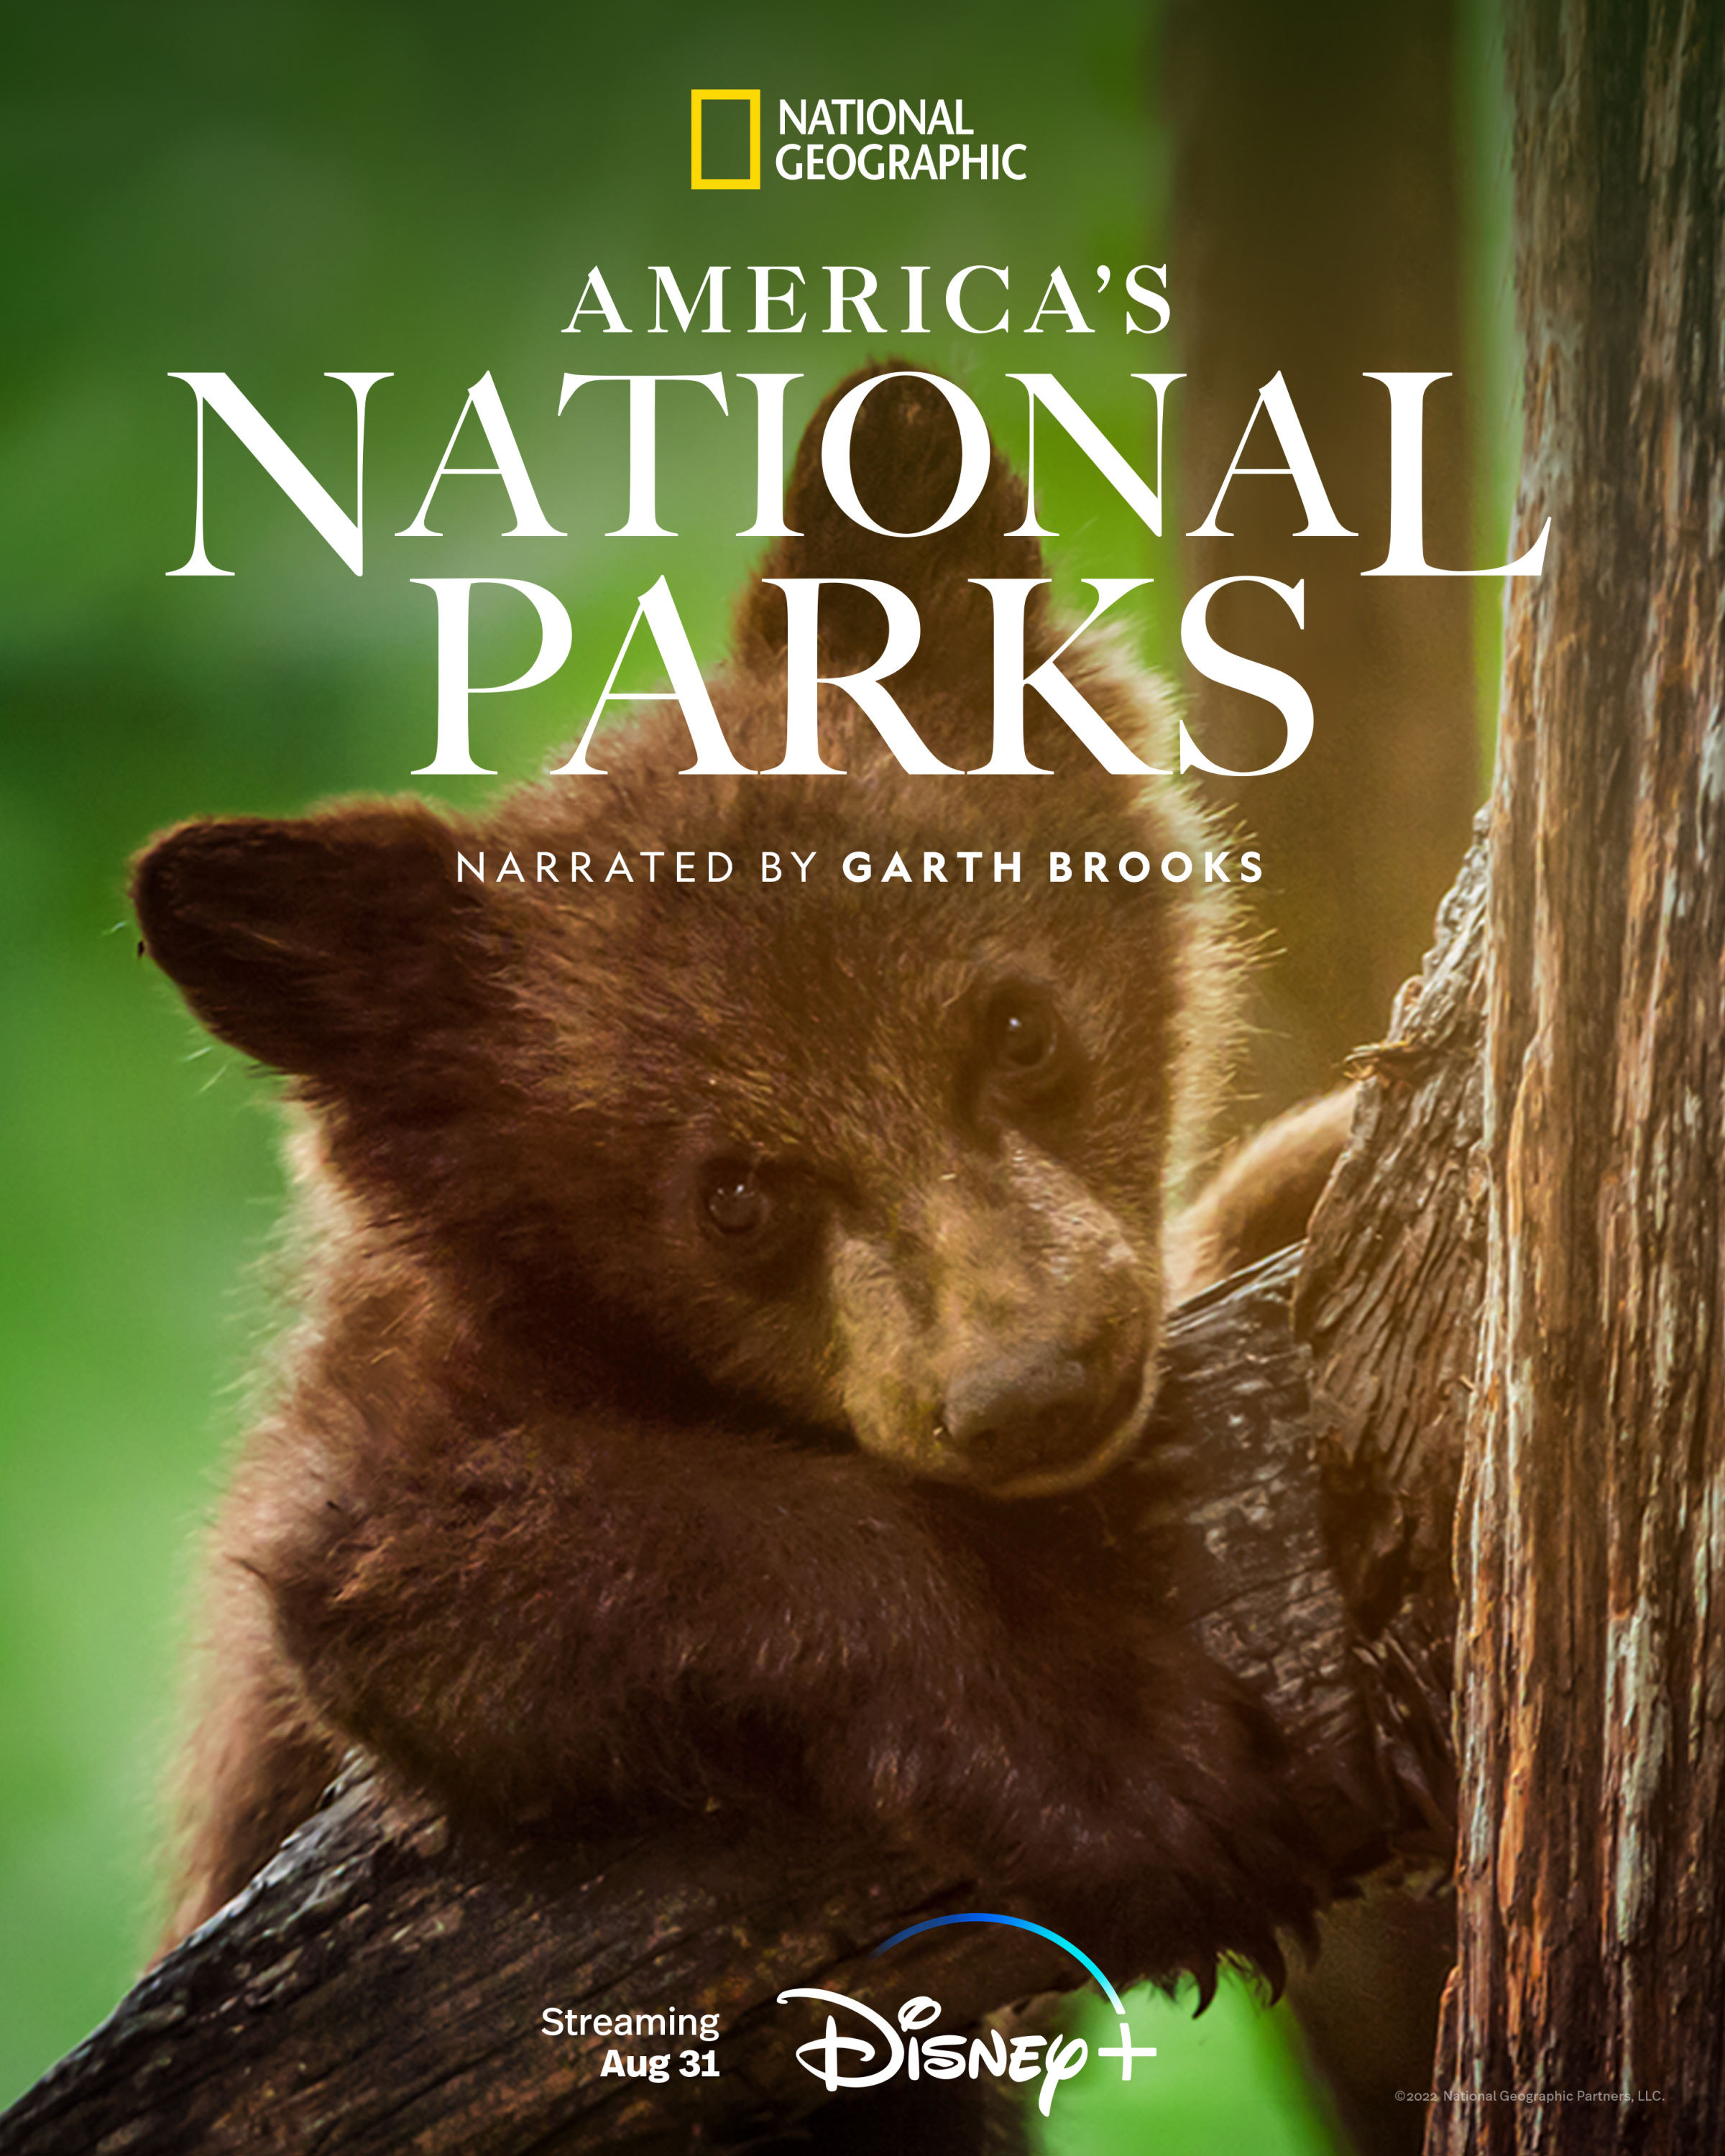 Mega Sized TV Poster Image for America's National Parks 